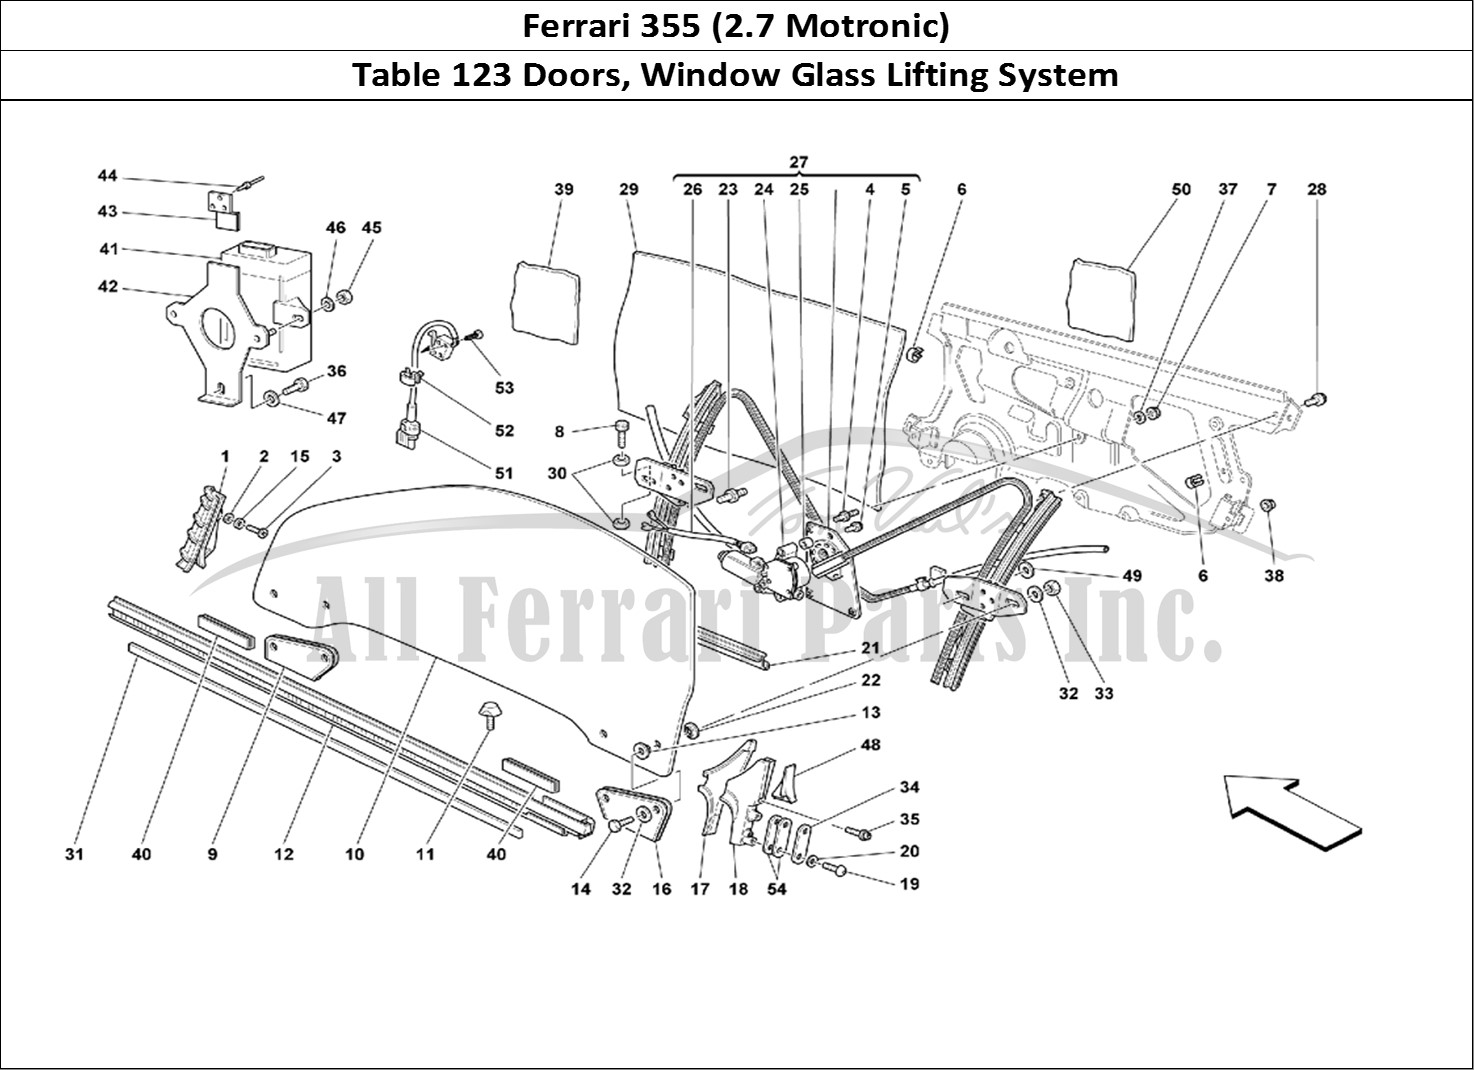 Ferrari Parts Ferrari 355 (2.7 Motronic) Page 123 Doors - Glass Lifting Dev